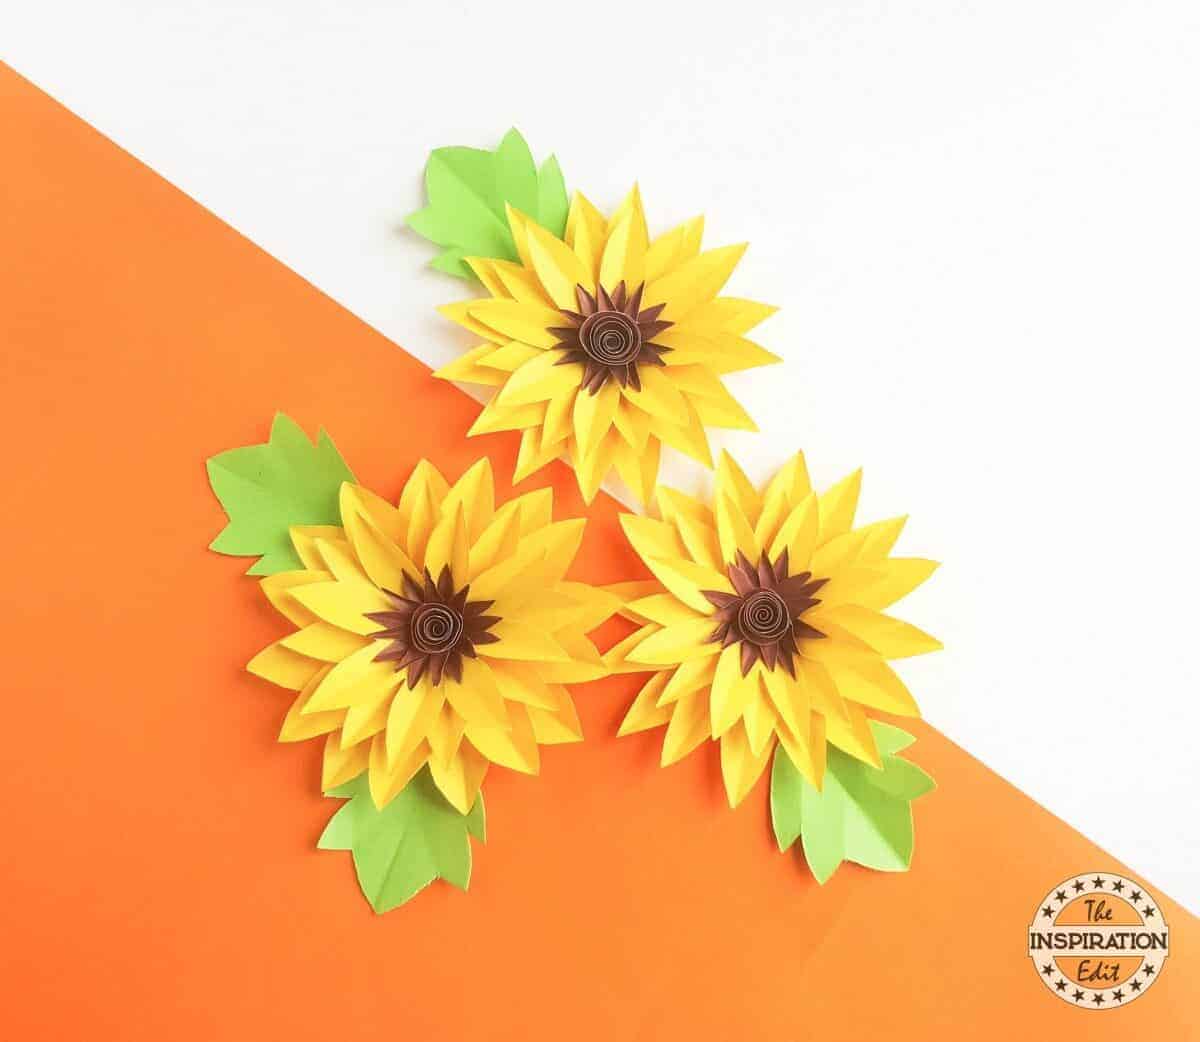 Diy Paper Sunflower Craft For Kids The Inspiration Edit